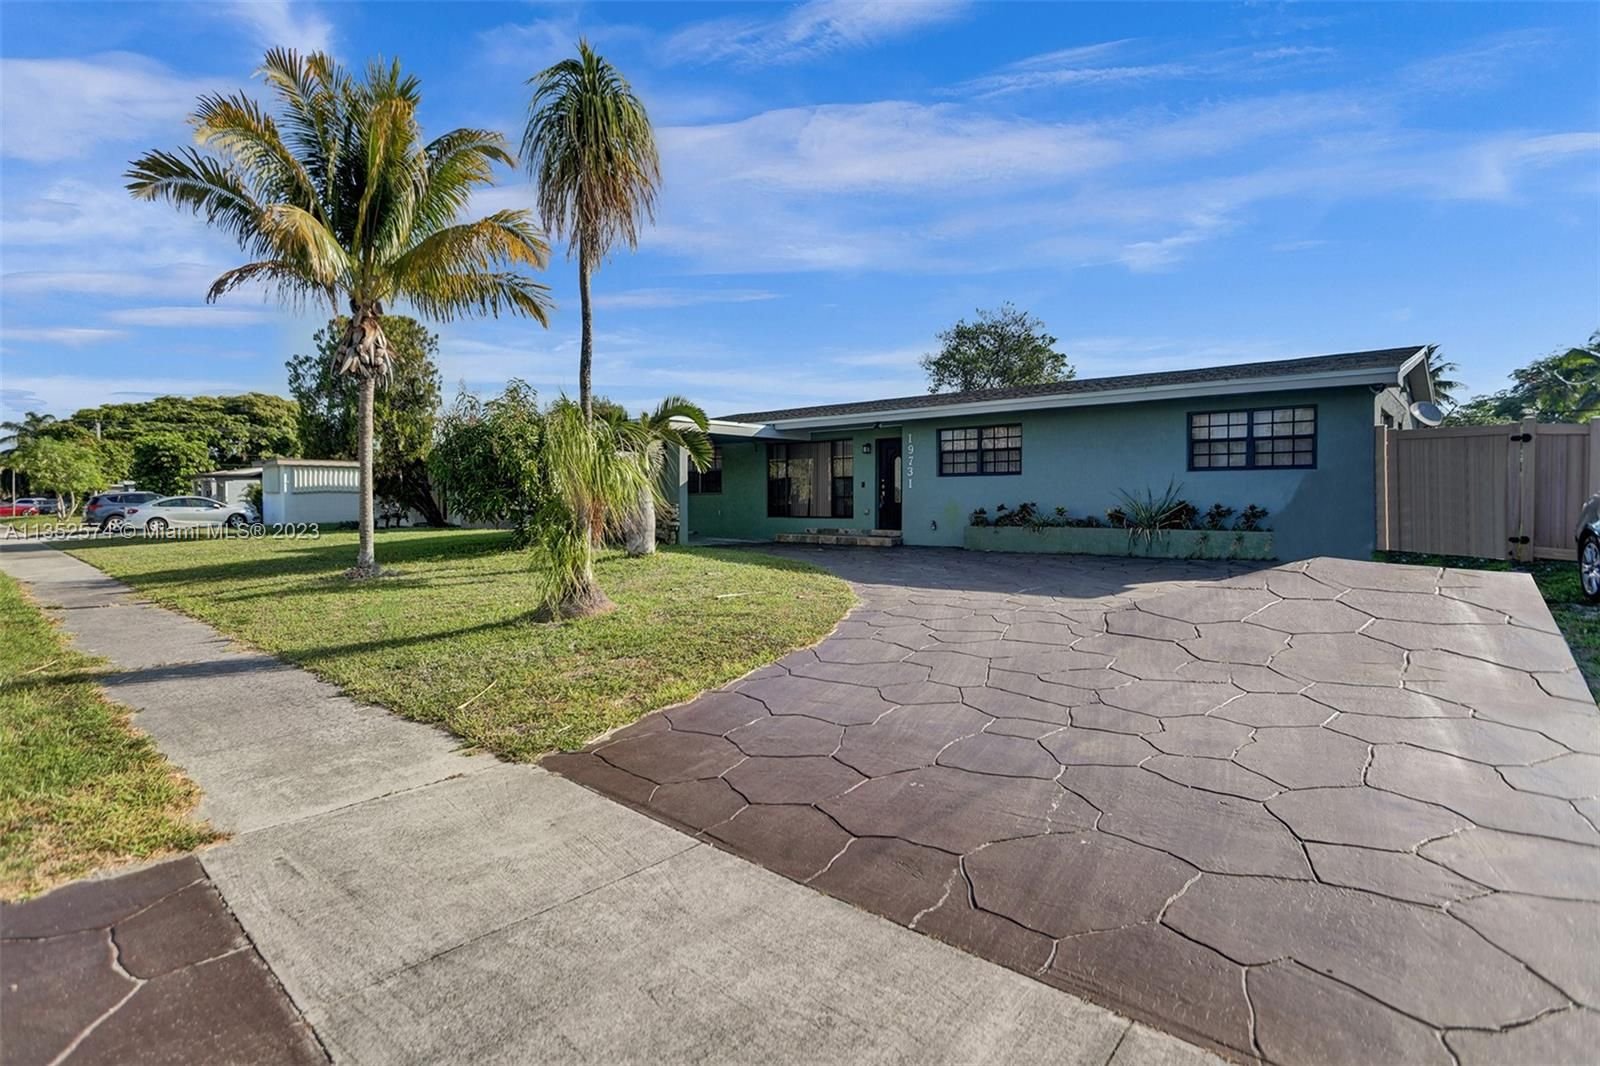 Real estate property located at 19731 11th Pl, Miami-Dade County, Miami, FL